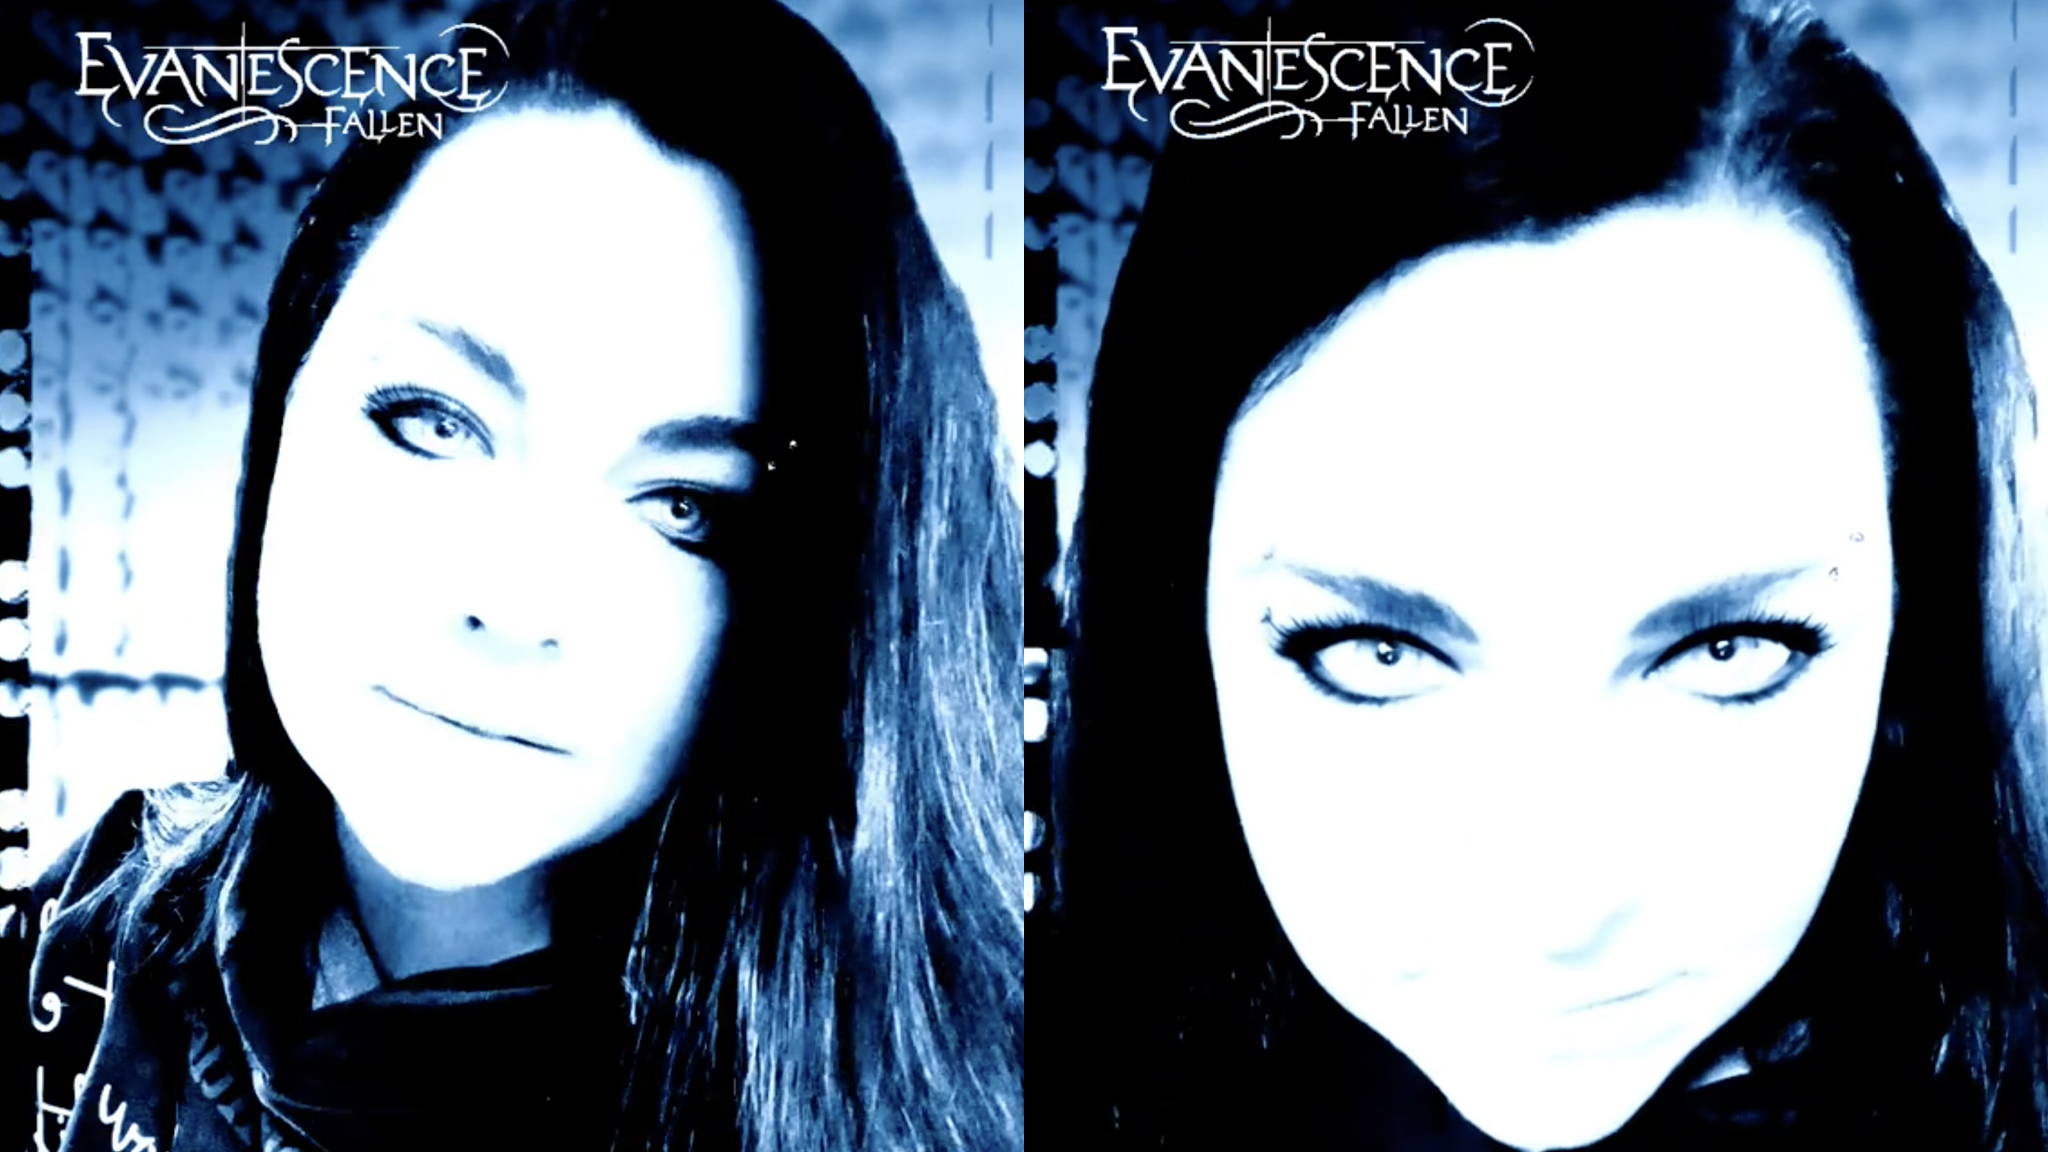 Fallen - Album by Evanescence